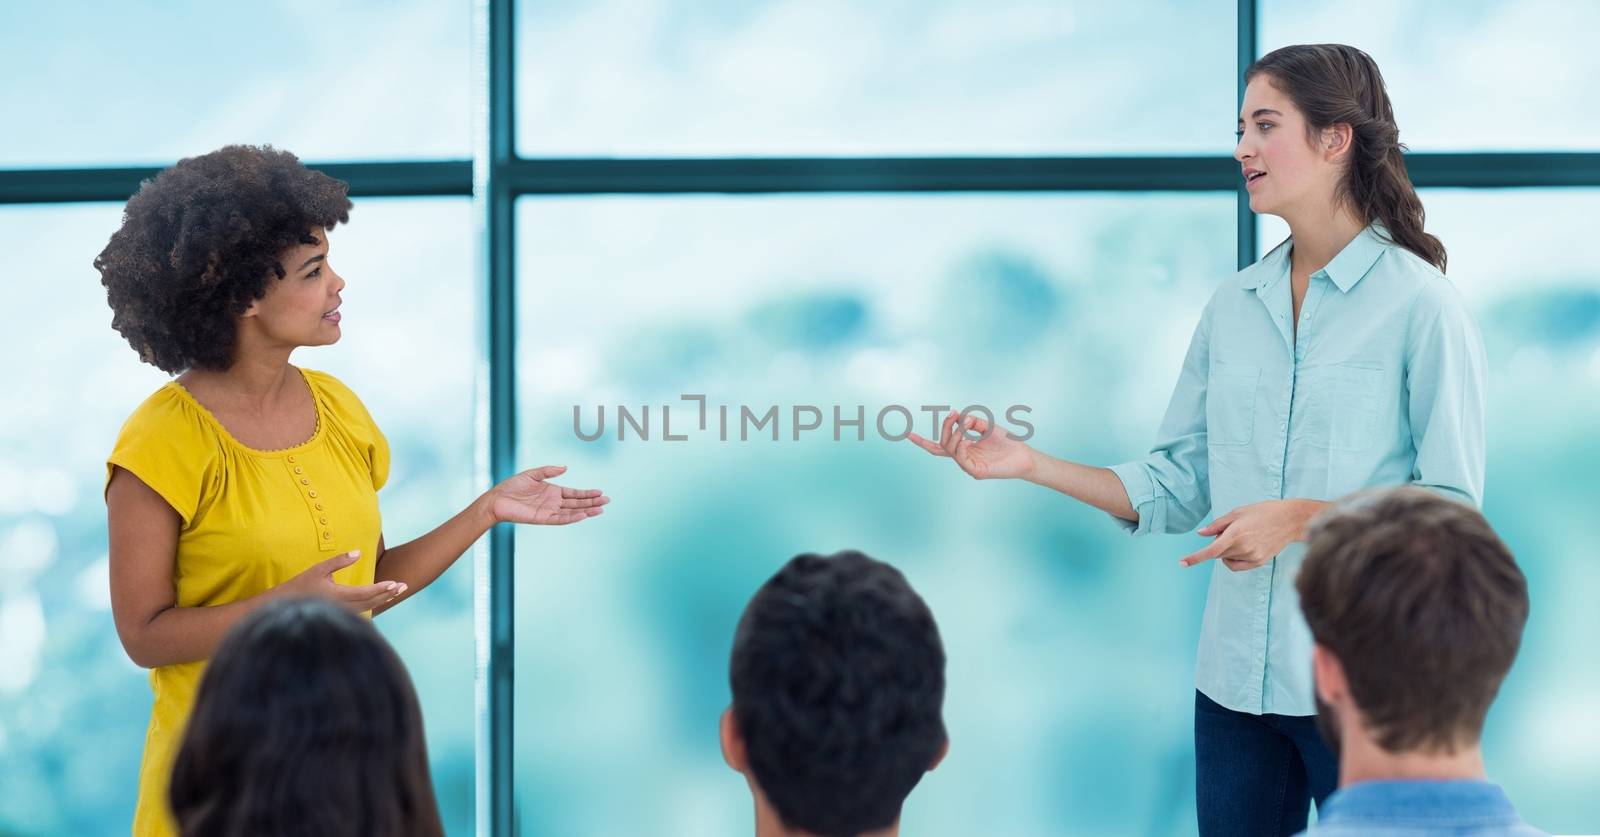 Digital composite of business people at presentation